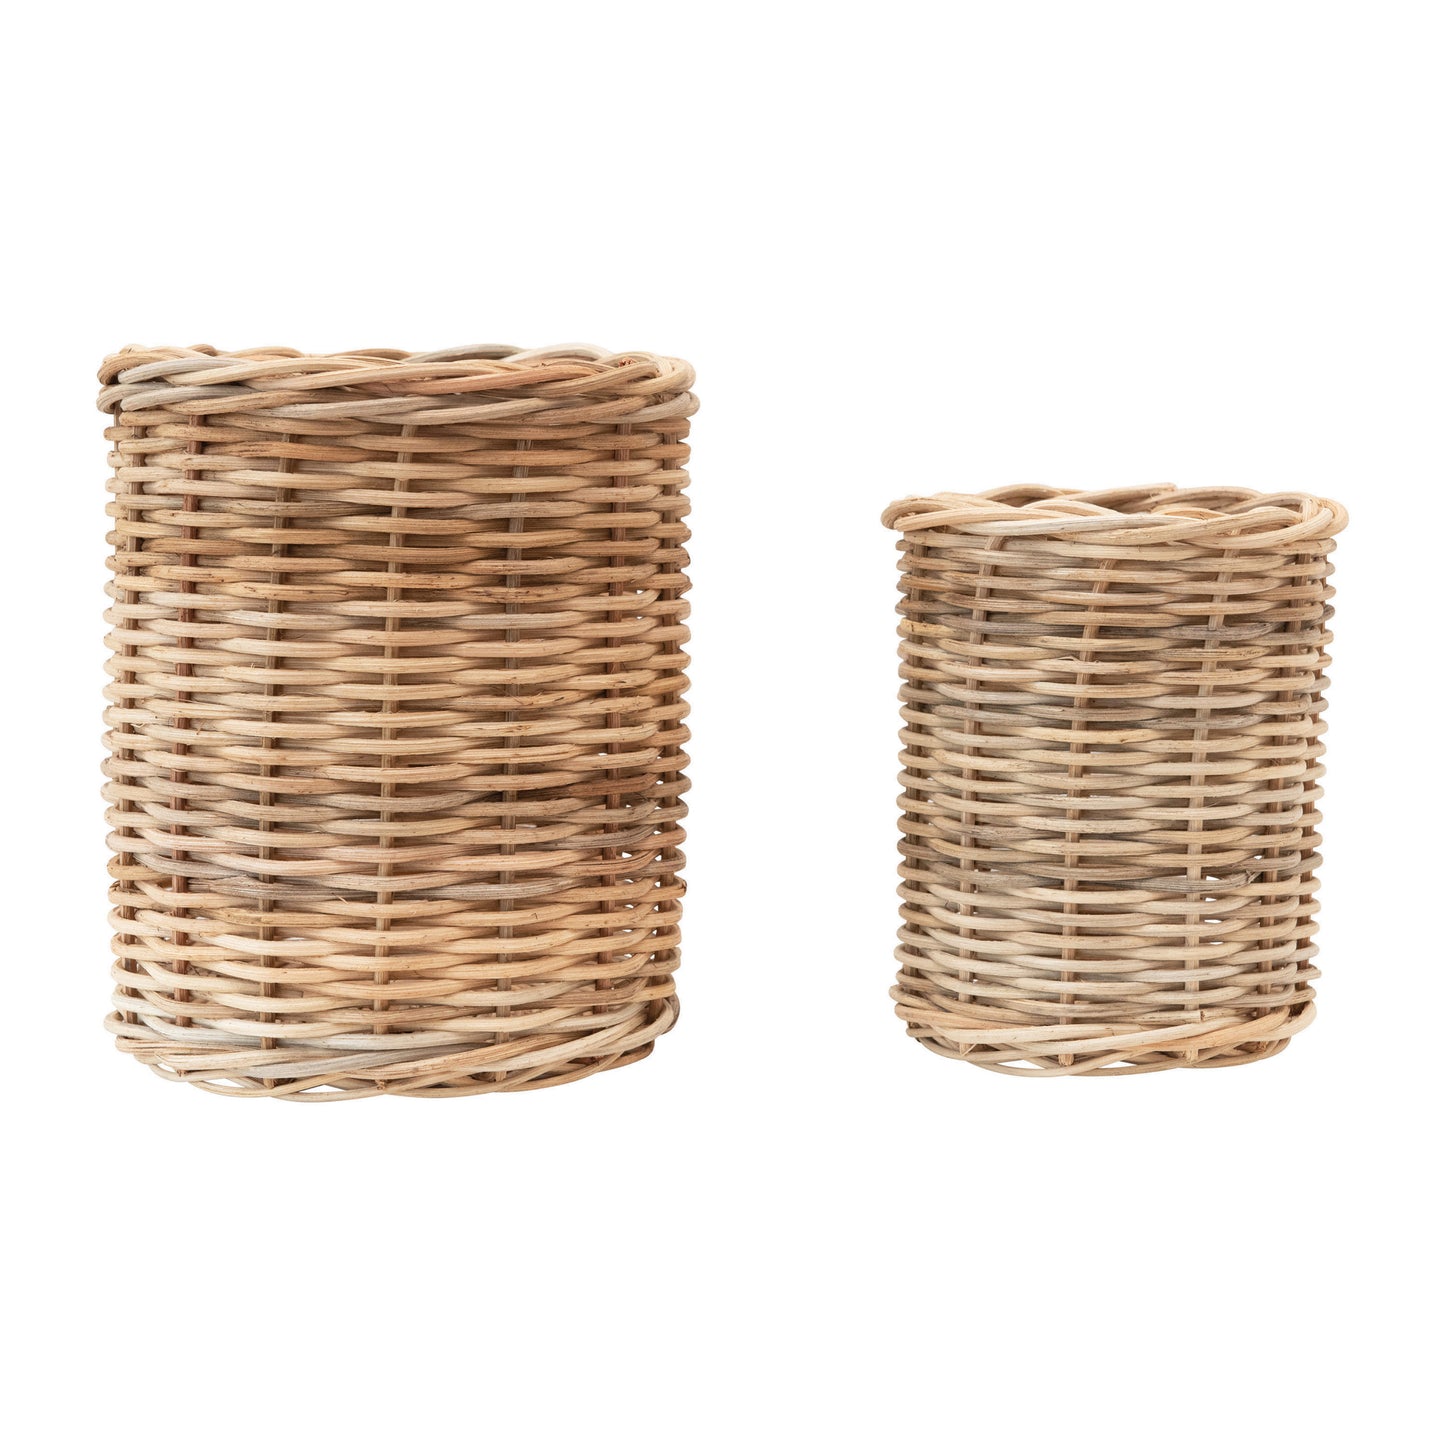 Hand-Woven Natural Wicker Basket